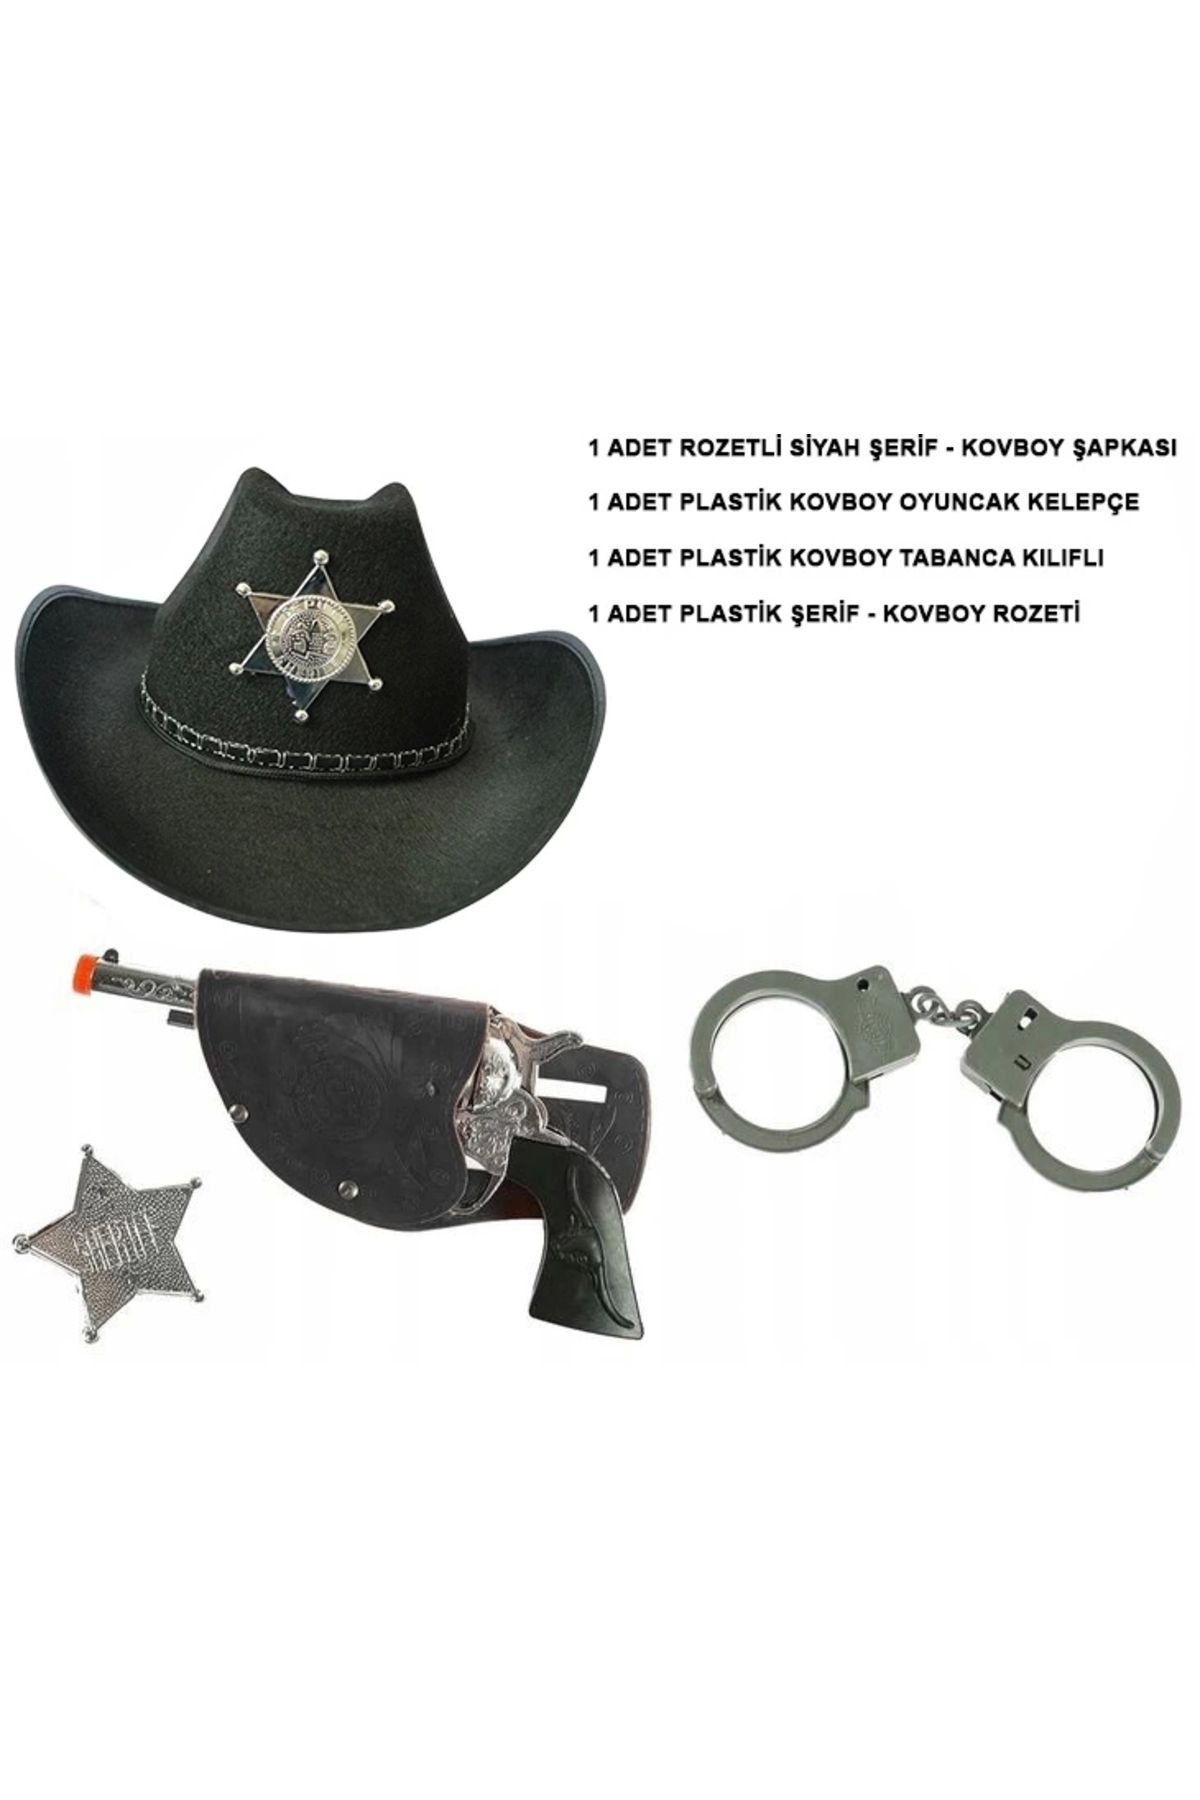 Genel Markalar Çocuk Boy Siyah Şerif-kovboy Şapka Tabanca Rozet Ve Kelepçe Seti 4 Parça